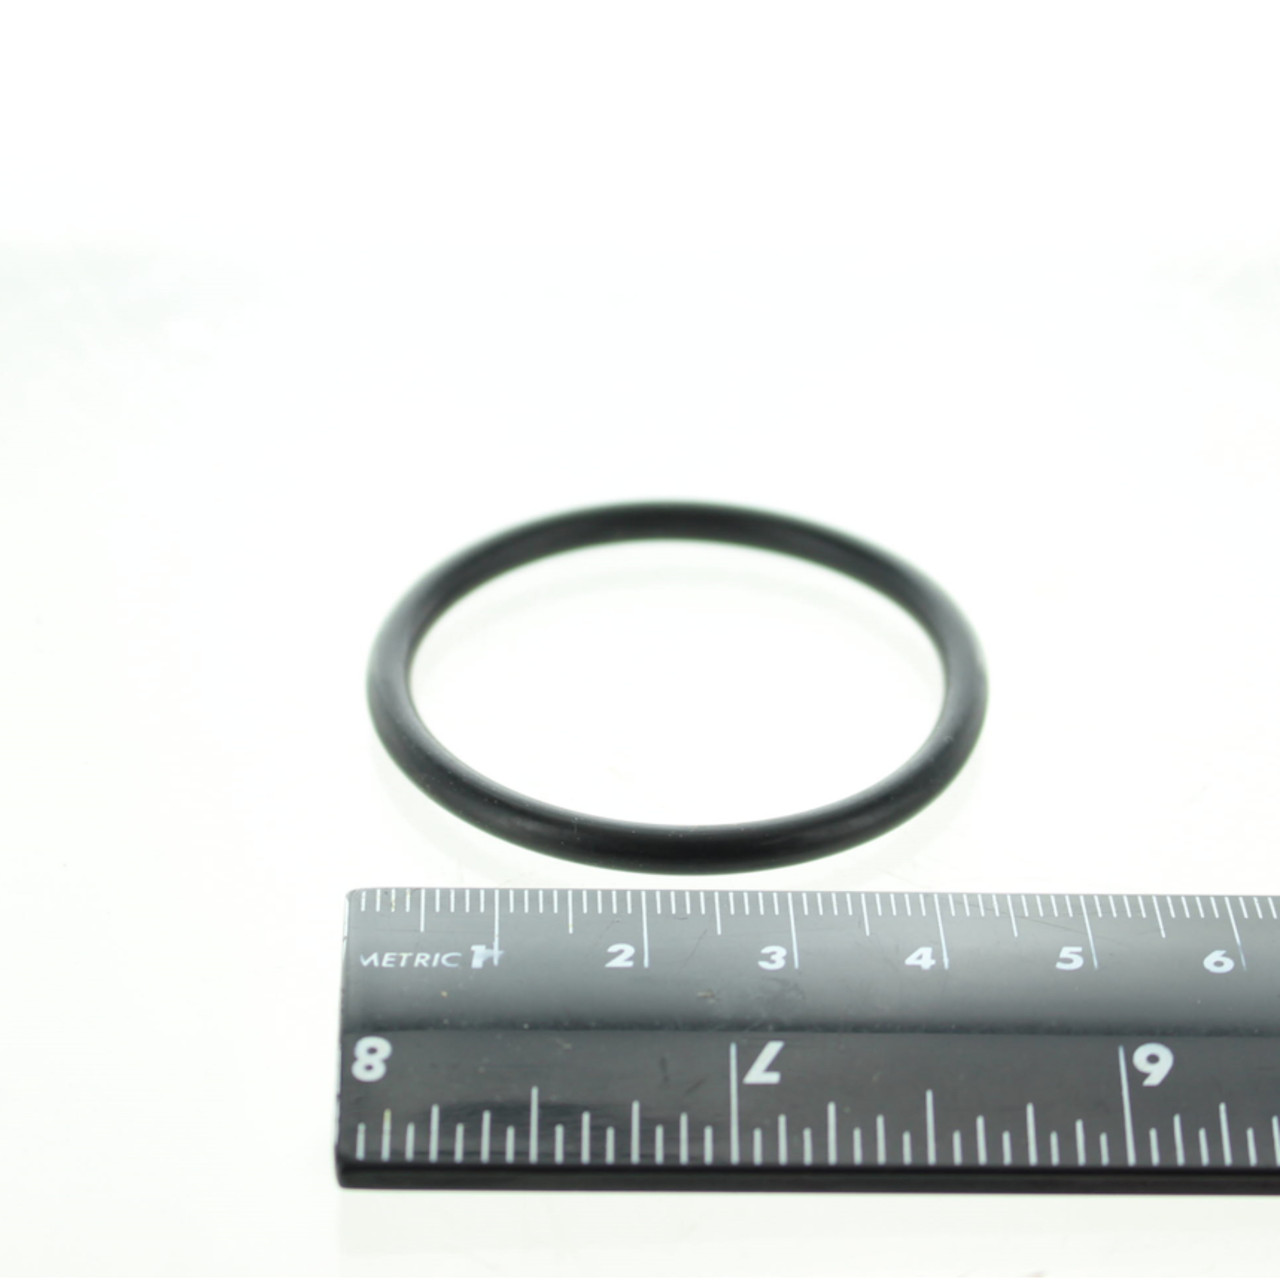 Polaris New OEM Rubber O-Ring Set of 10 1800030